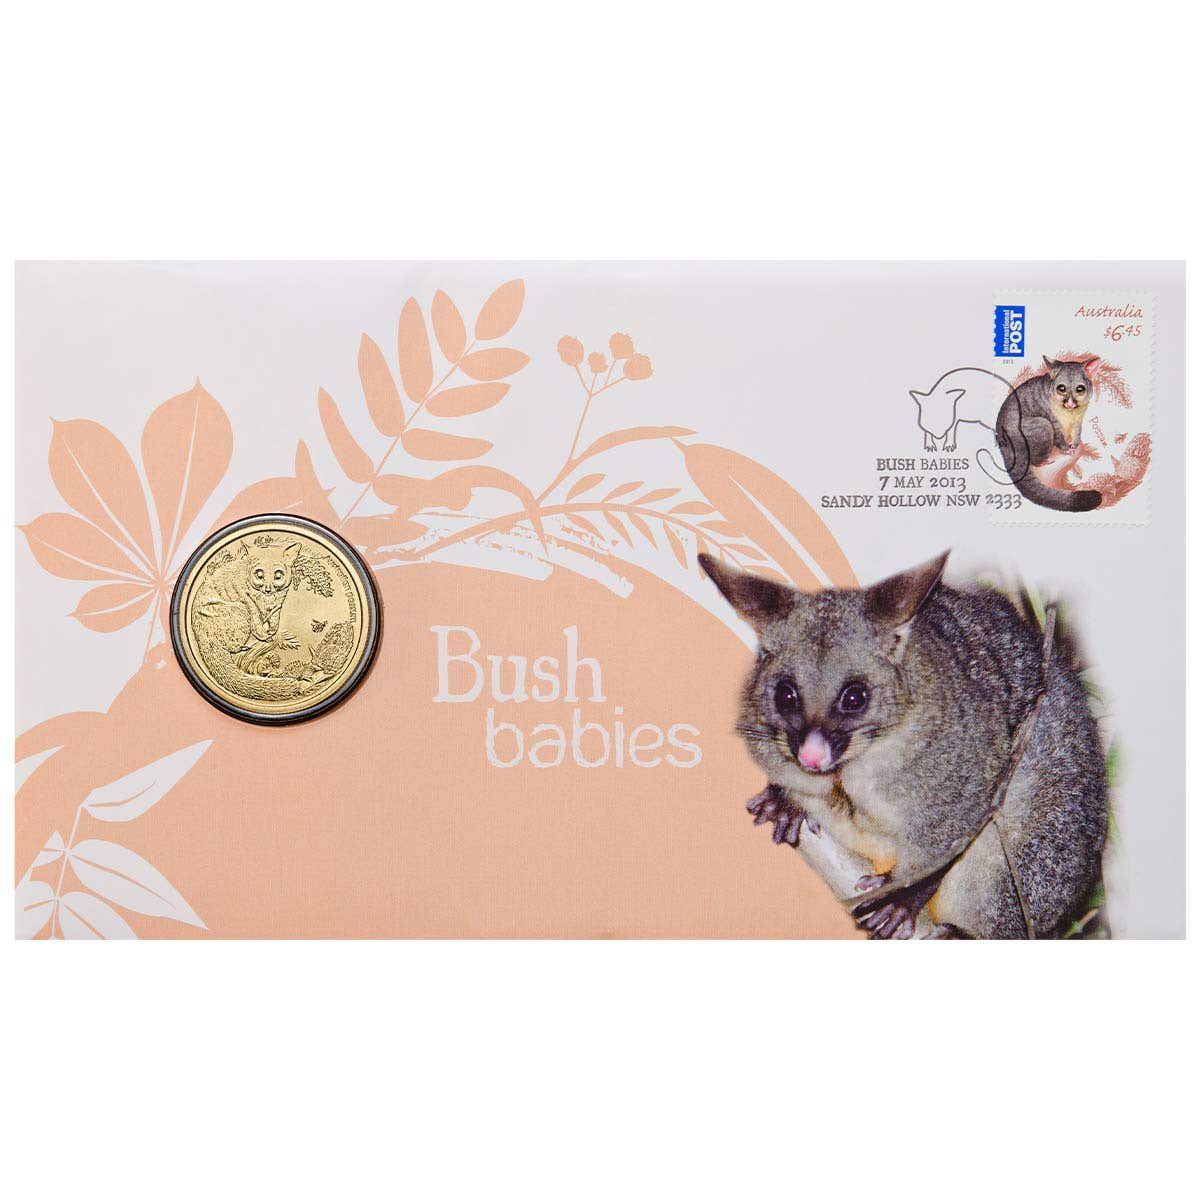 Bush Babies Possum 2013 $1 Stamp & Coin Cover